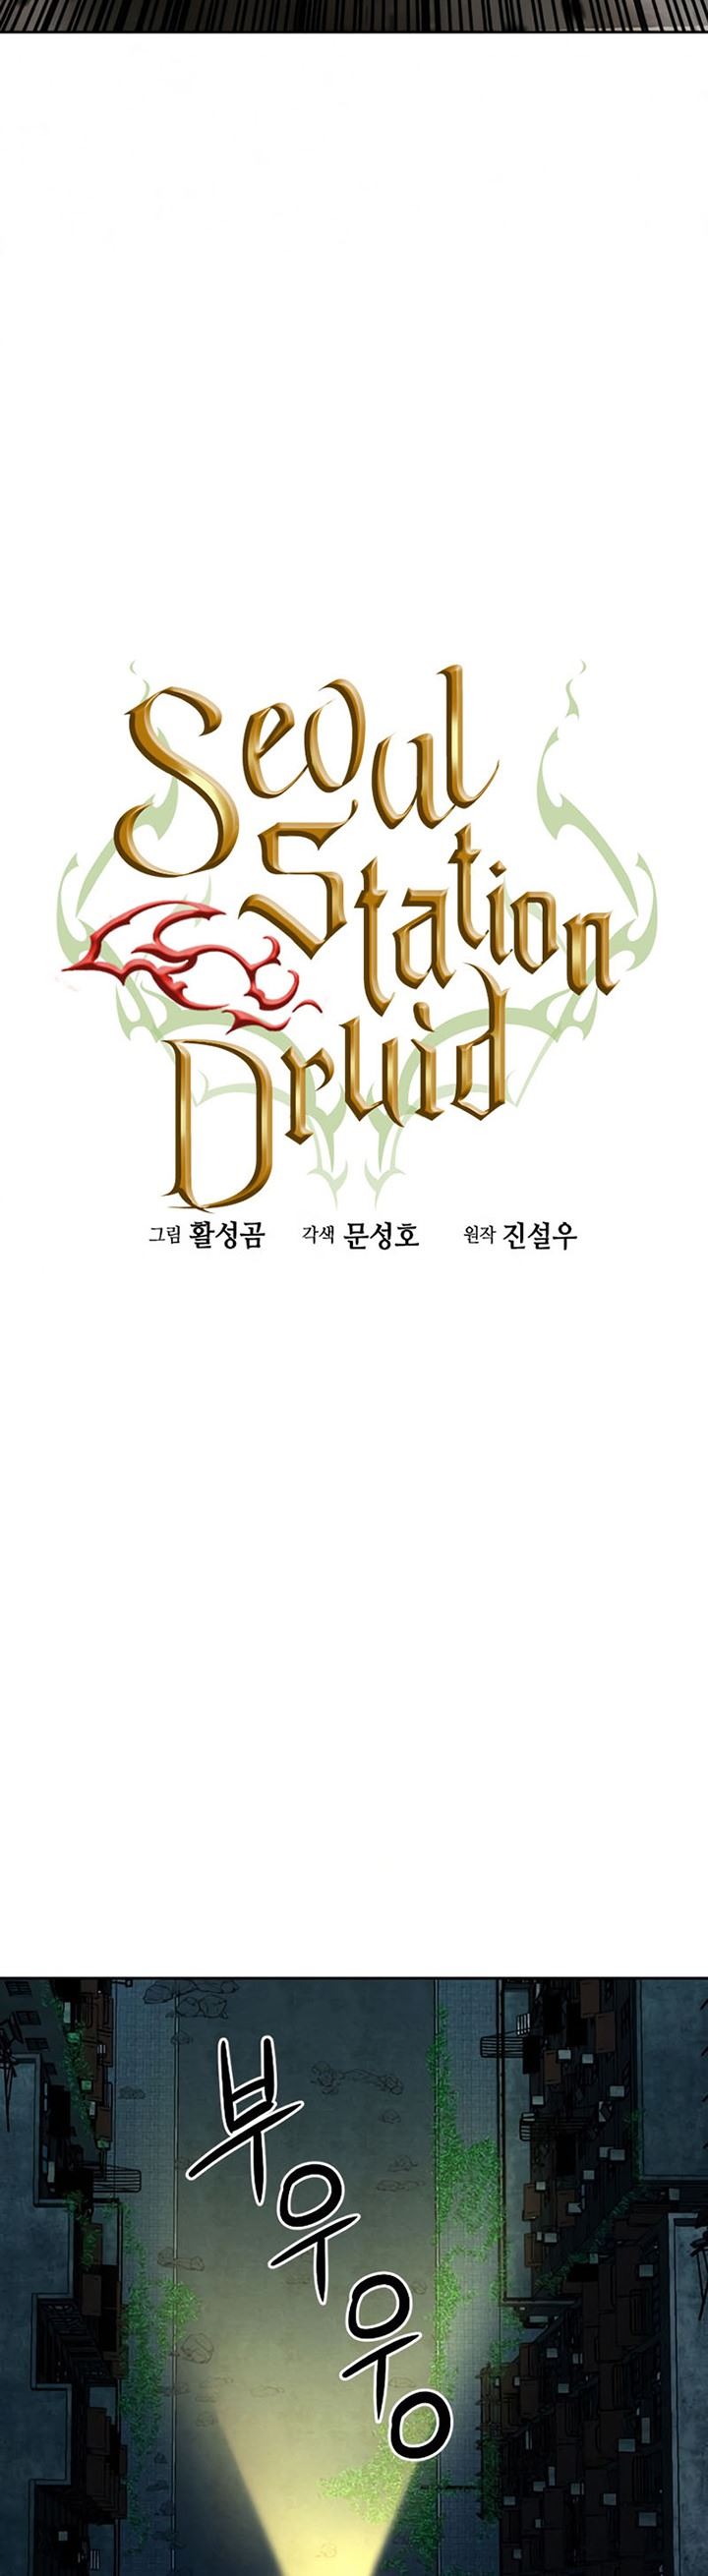 Seoul Station Druid Chapter 53